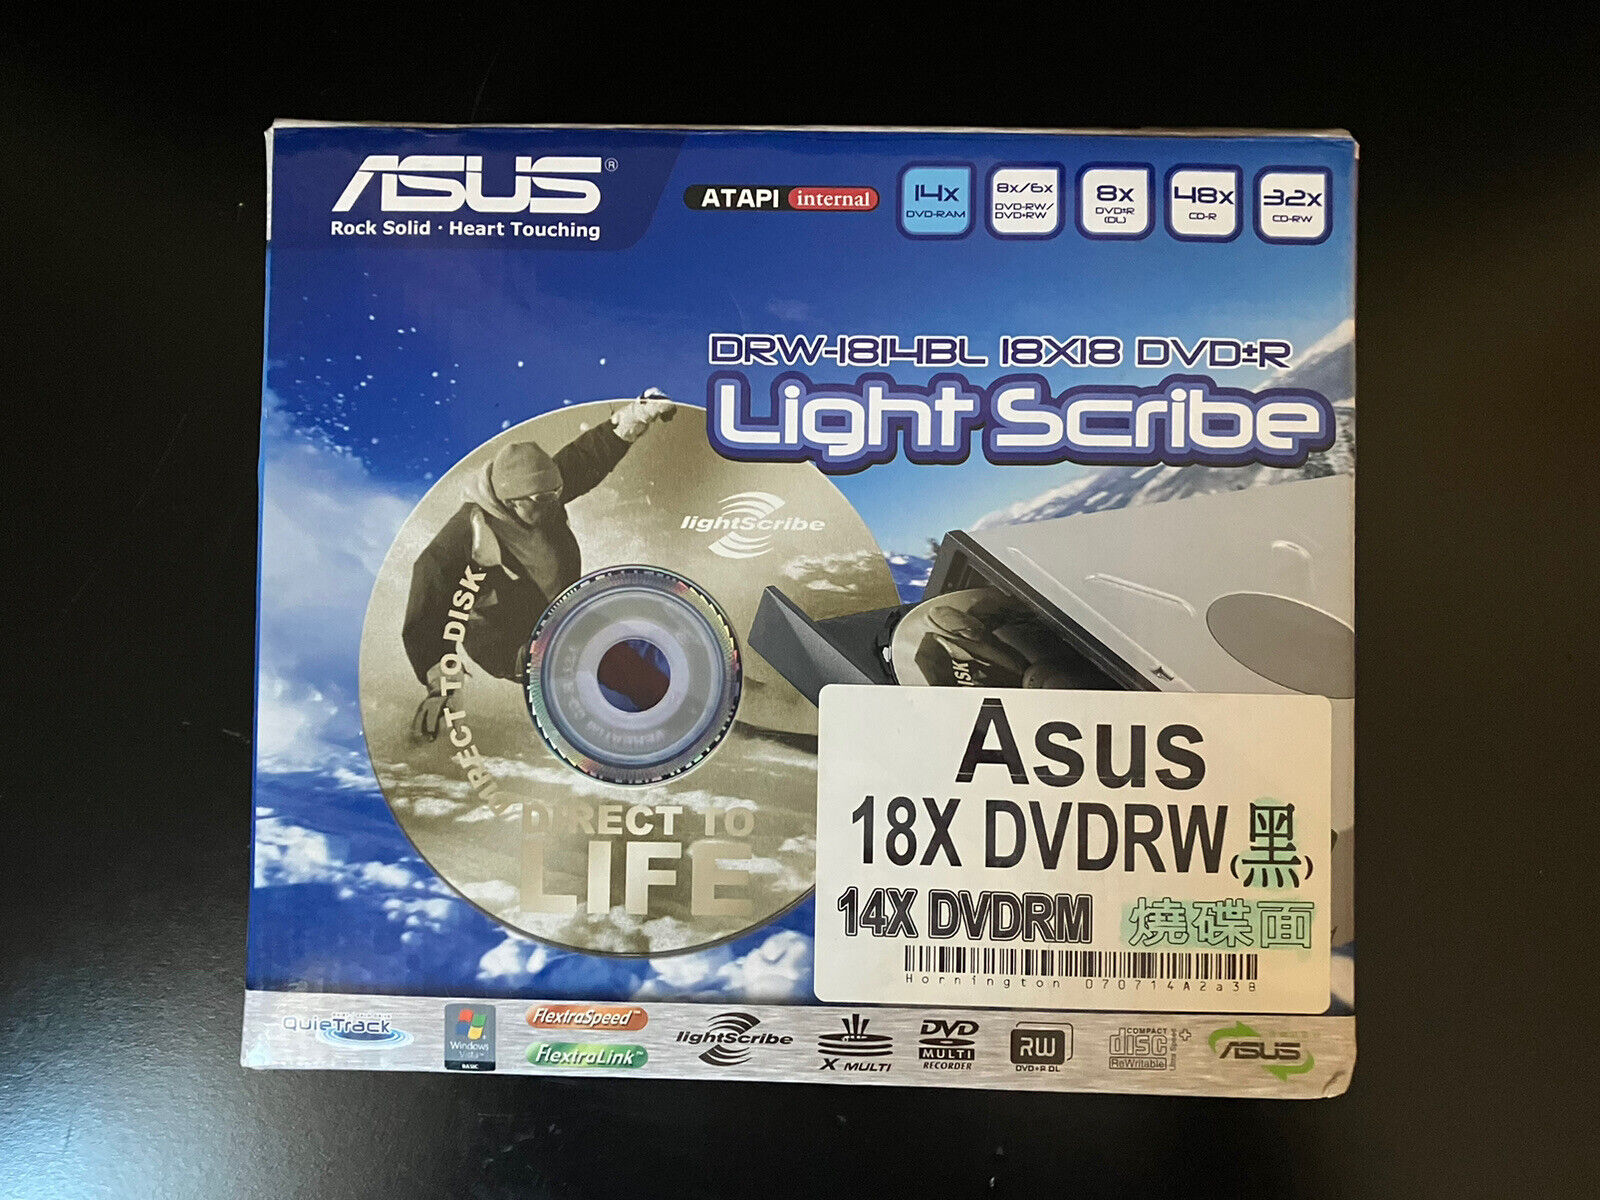 ASUS QuieTrack DRW-1814BL 18x Internal DVD RW Drive w/ Lightscribe NEW